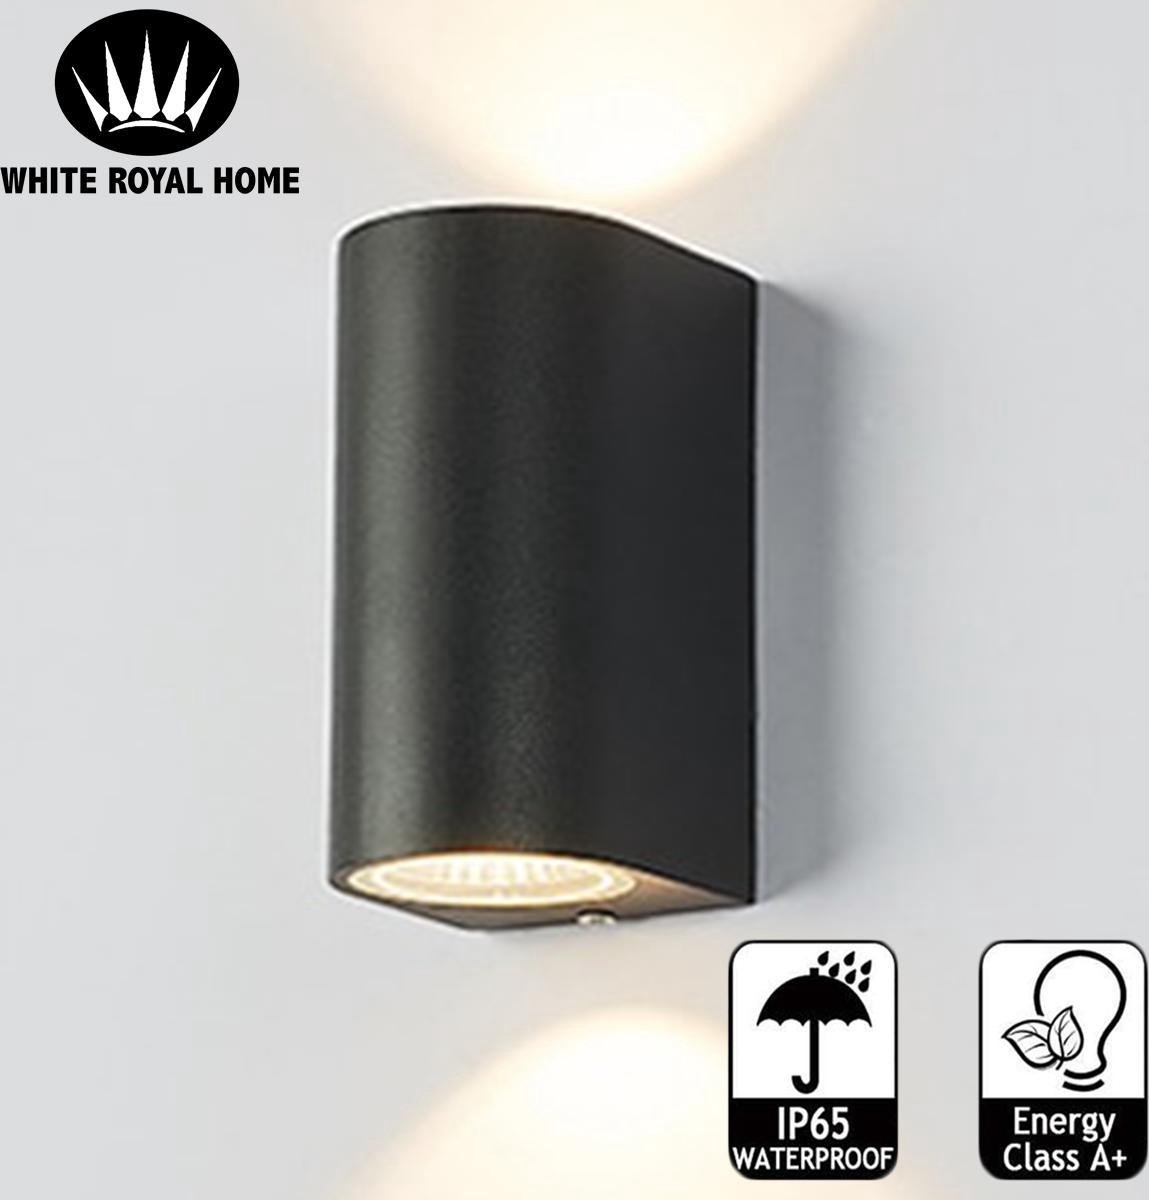 Wandlamp - Wandlamp Binnen & Buiten - Wandlamp slaapkamer - Wandlamp Zwart - LED - White Royal Home